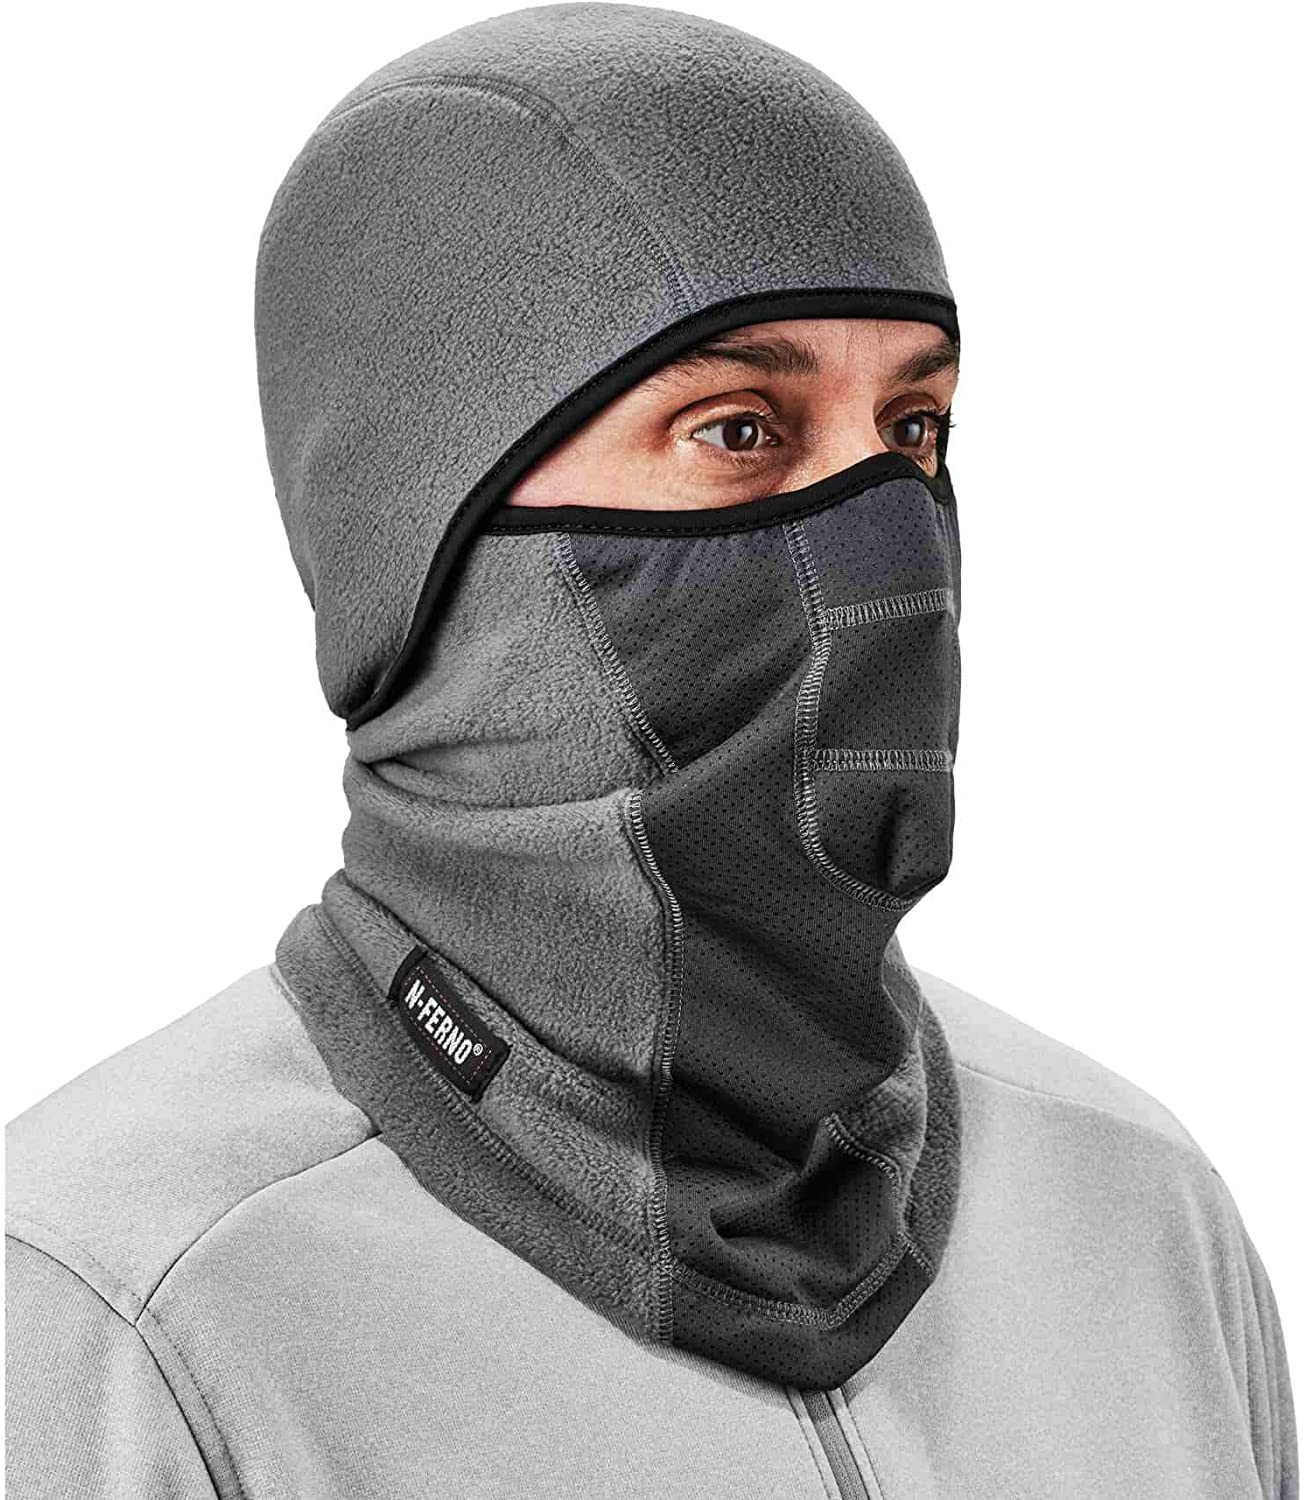 Ergodyne N-Ferno 6823 Balaclava Ski Mask, Wind-Resistant Face Mask, Hinged  Desig | eBay